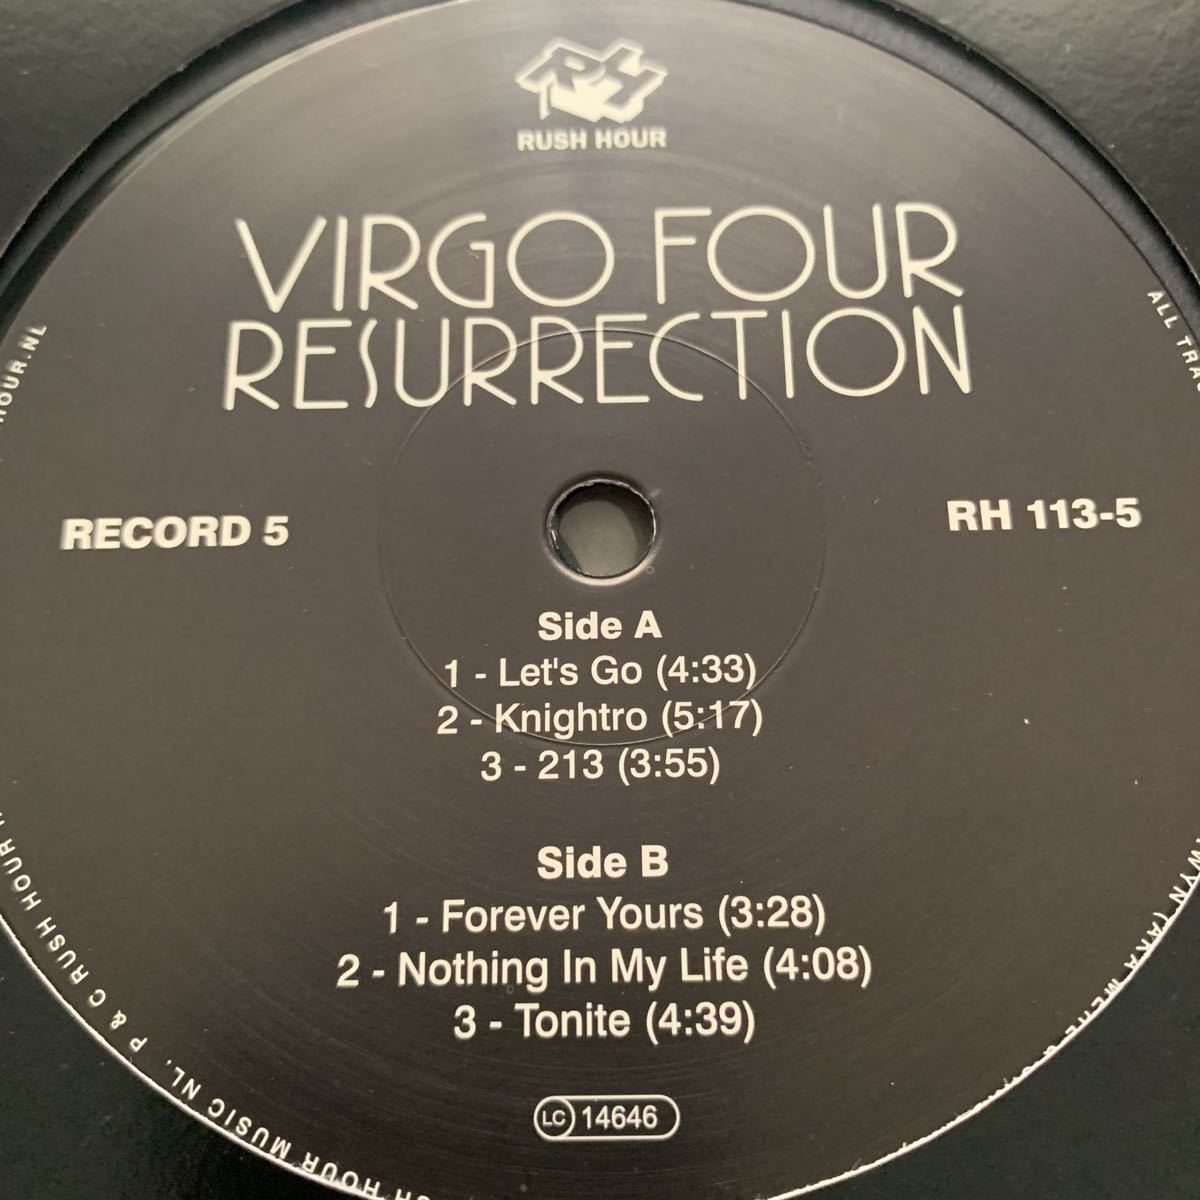 Virgo Four Resurrection 5LP BOX Rush Hour house techno